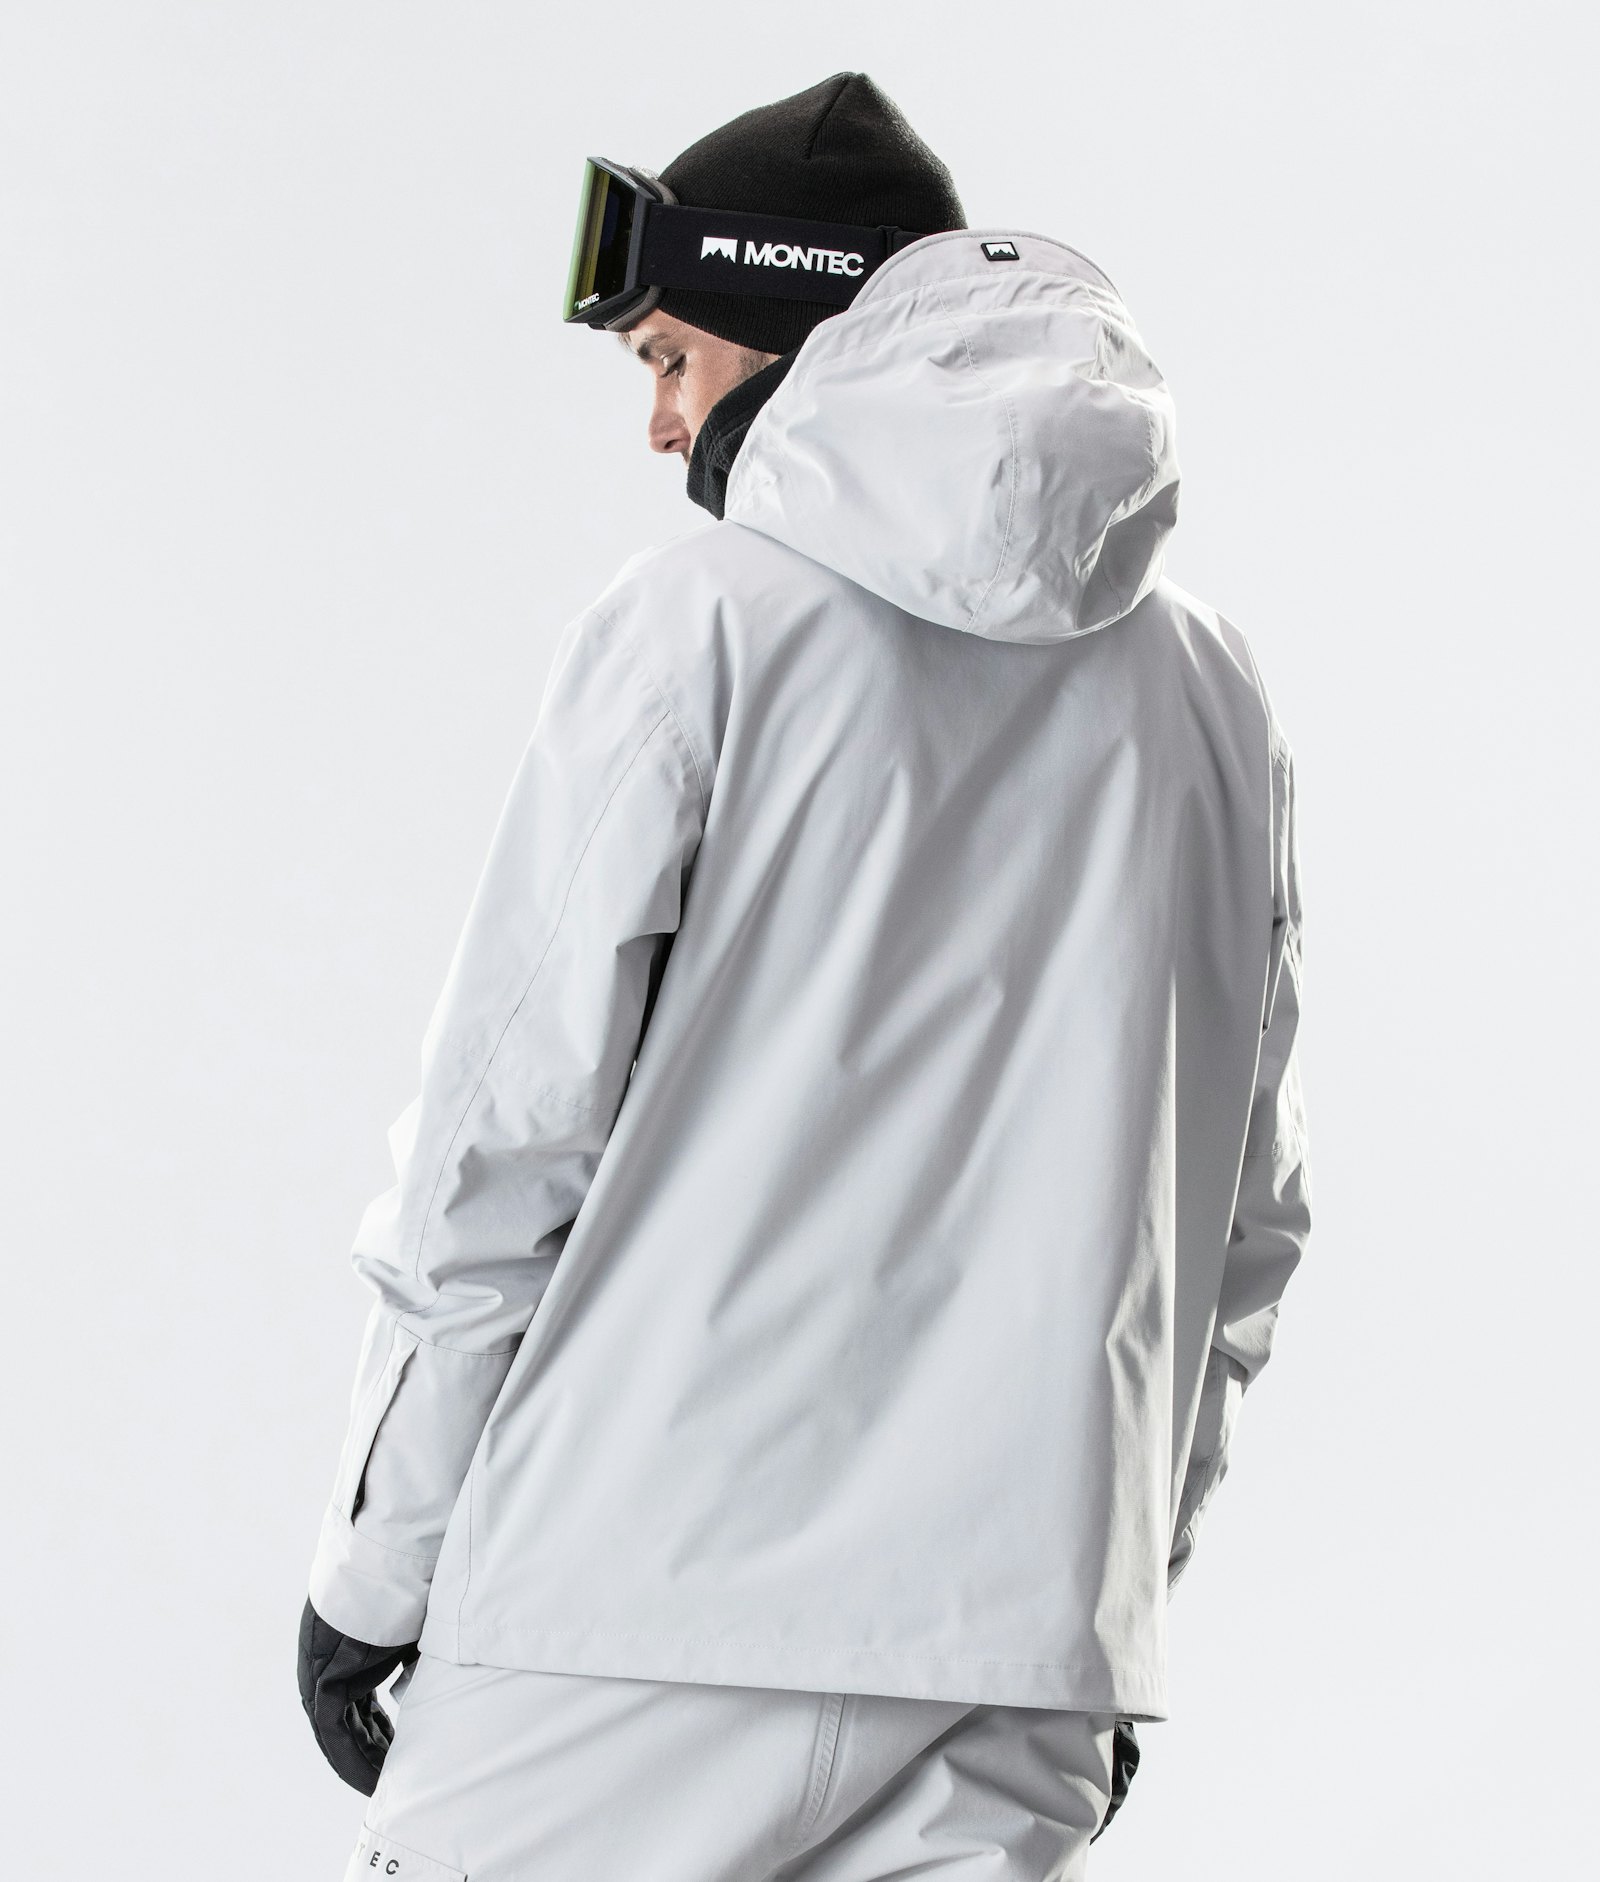 Typhoon 2020 Snowboardjakke Herre Light Grey/Black